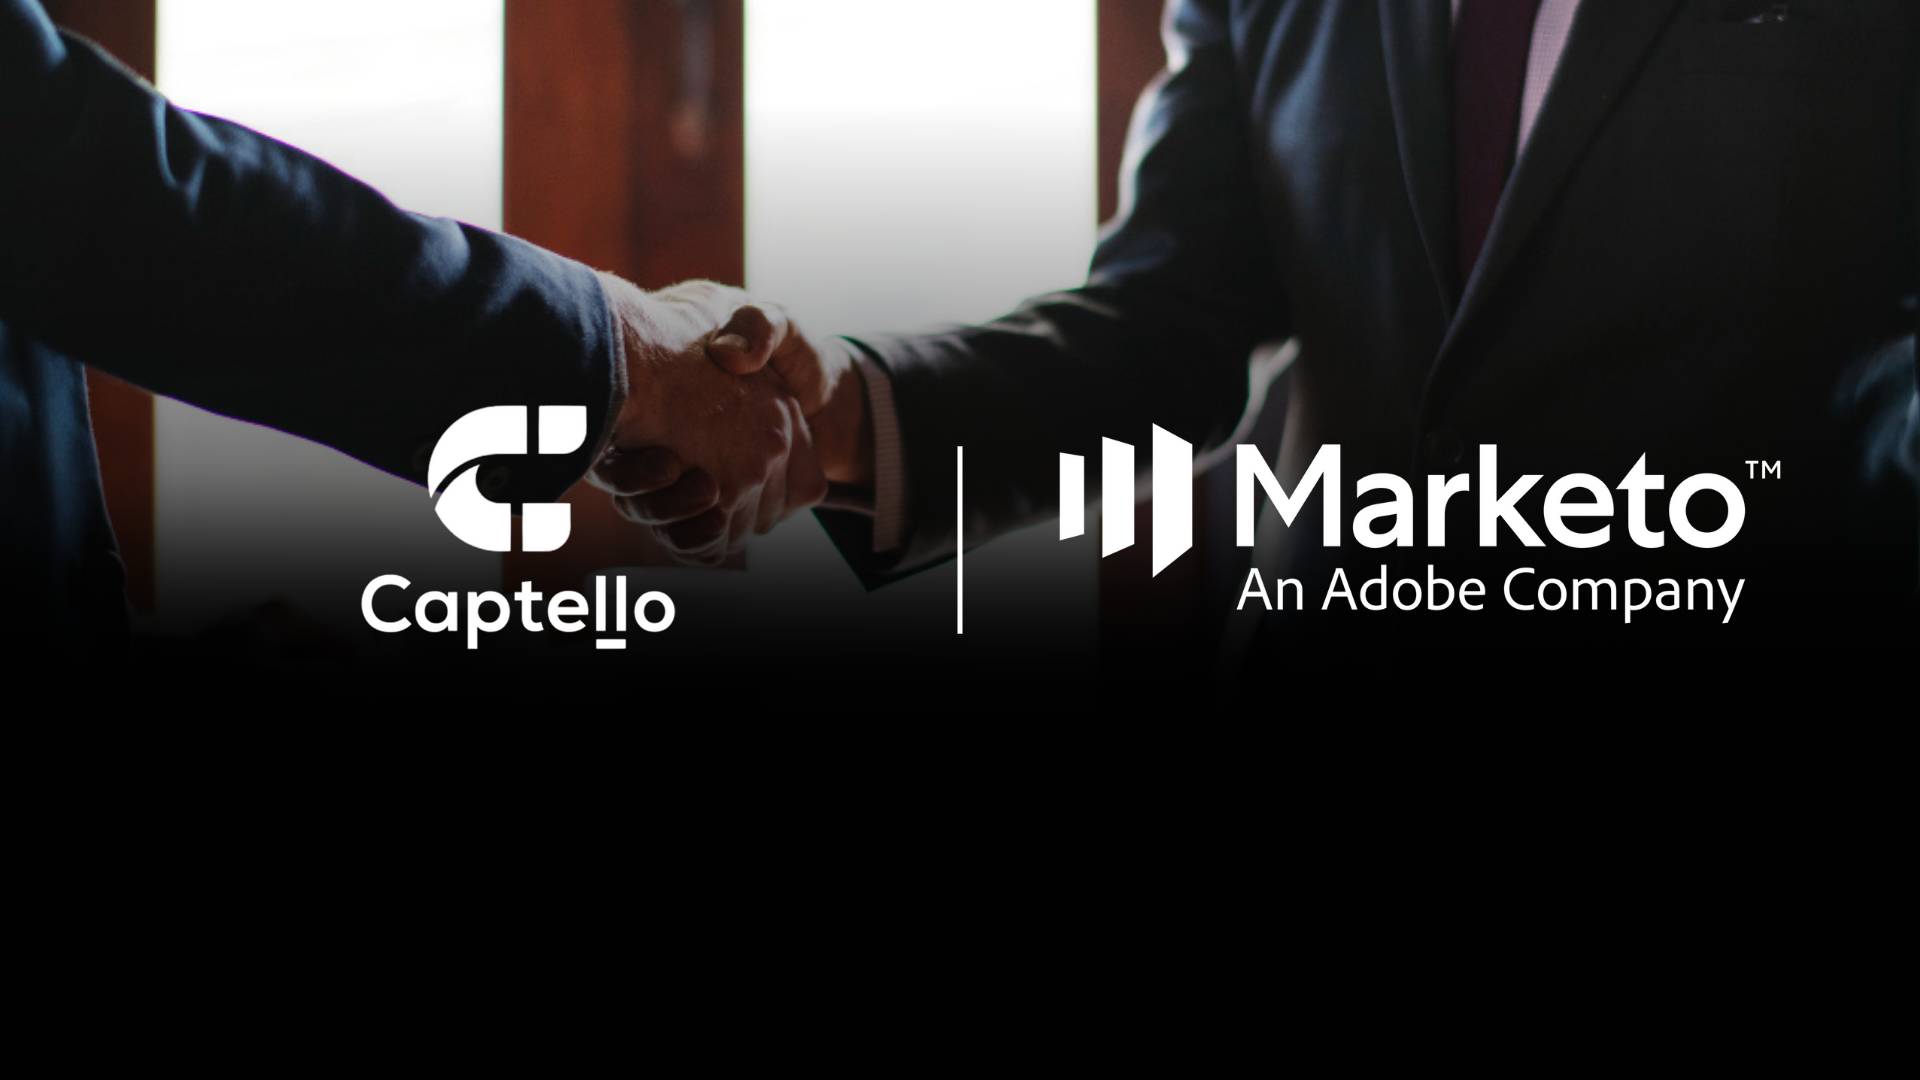 Captello Announces Silver Level Partnership with Adobe Marketo